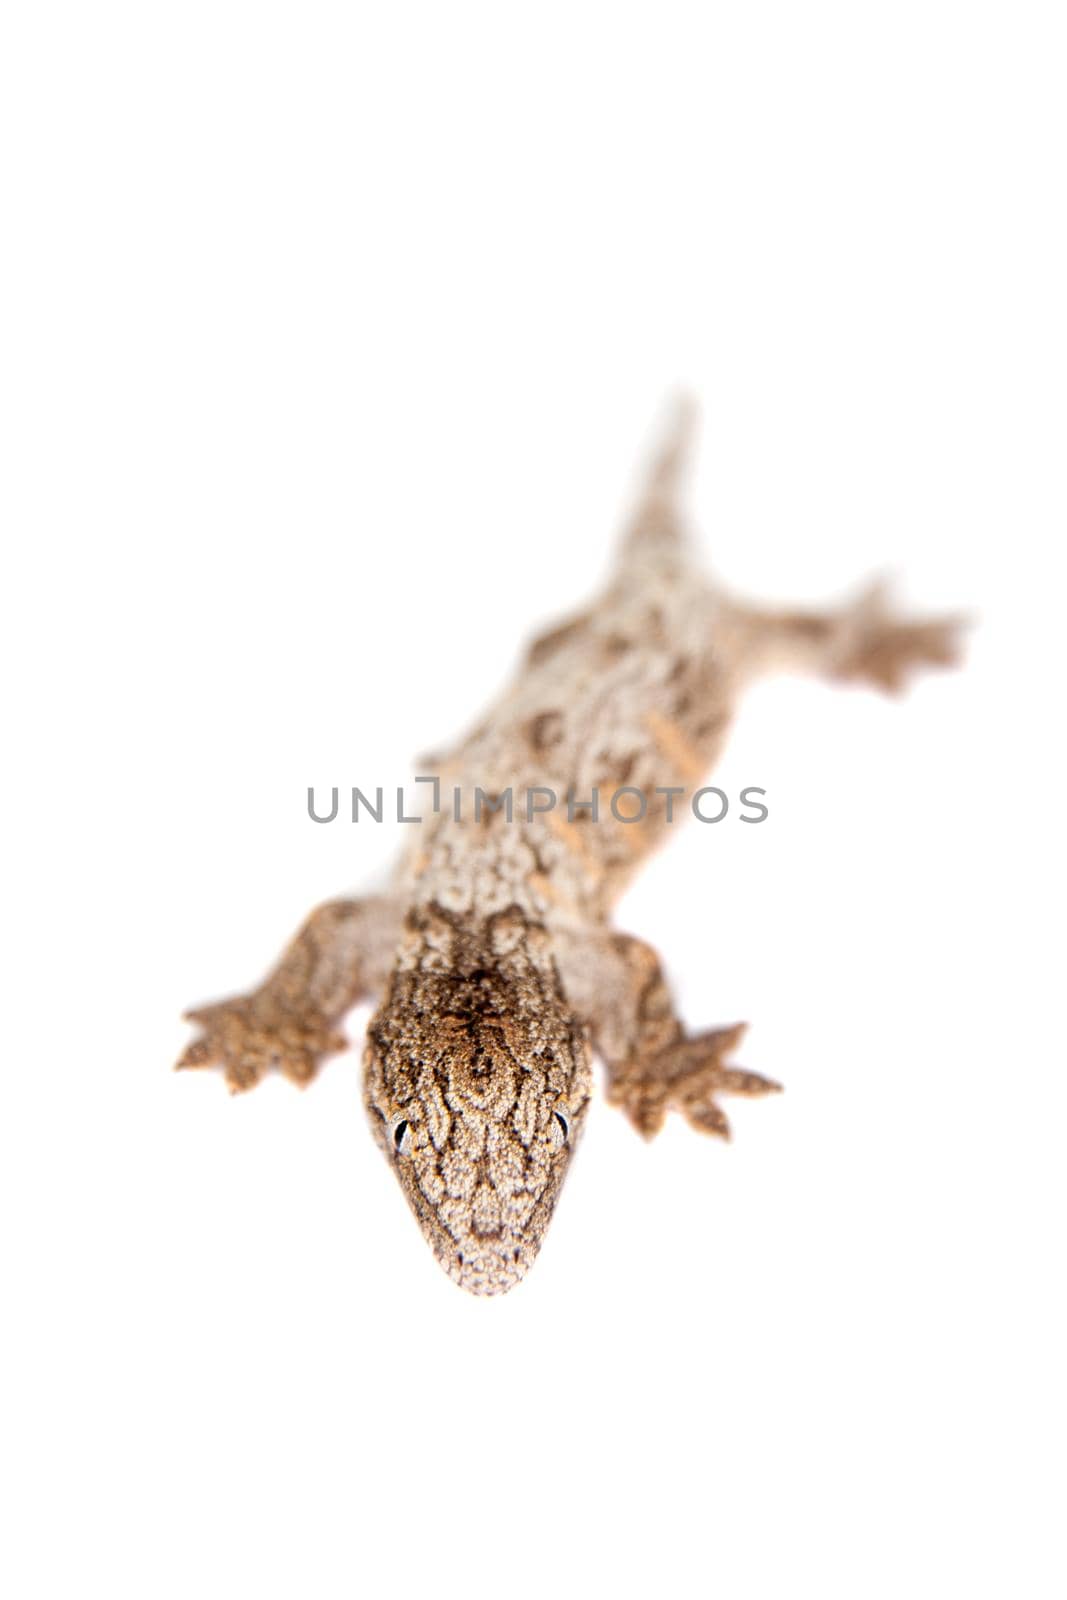 The New Caledonian giant gecko or Leach's giant gecko, Rhacodactylus leachianus isolated on white